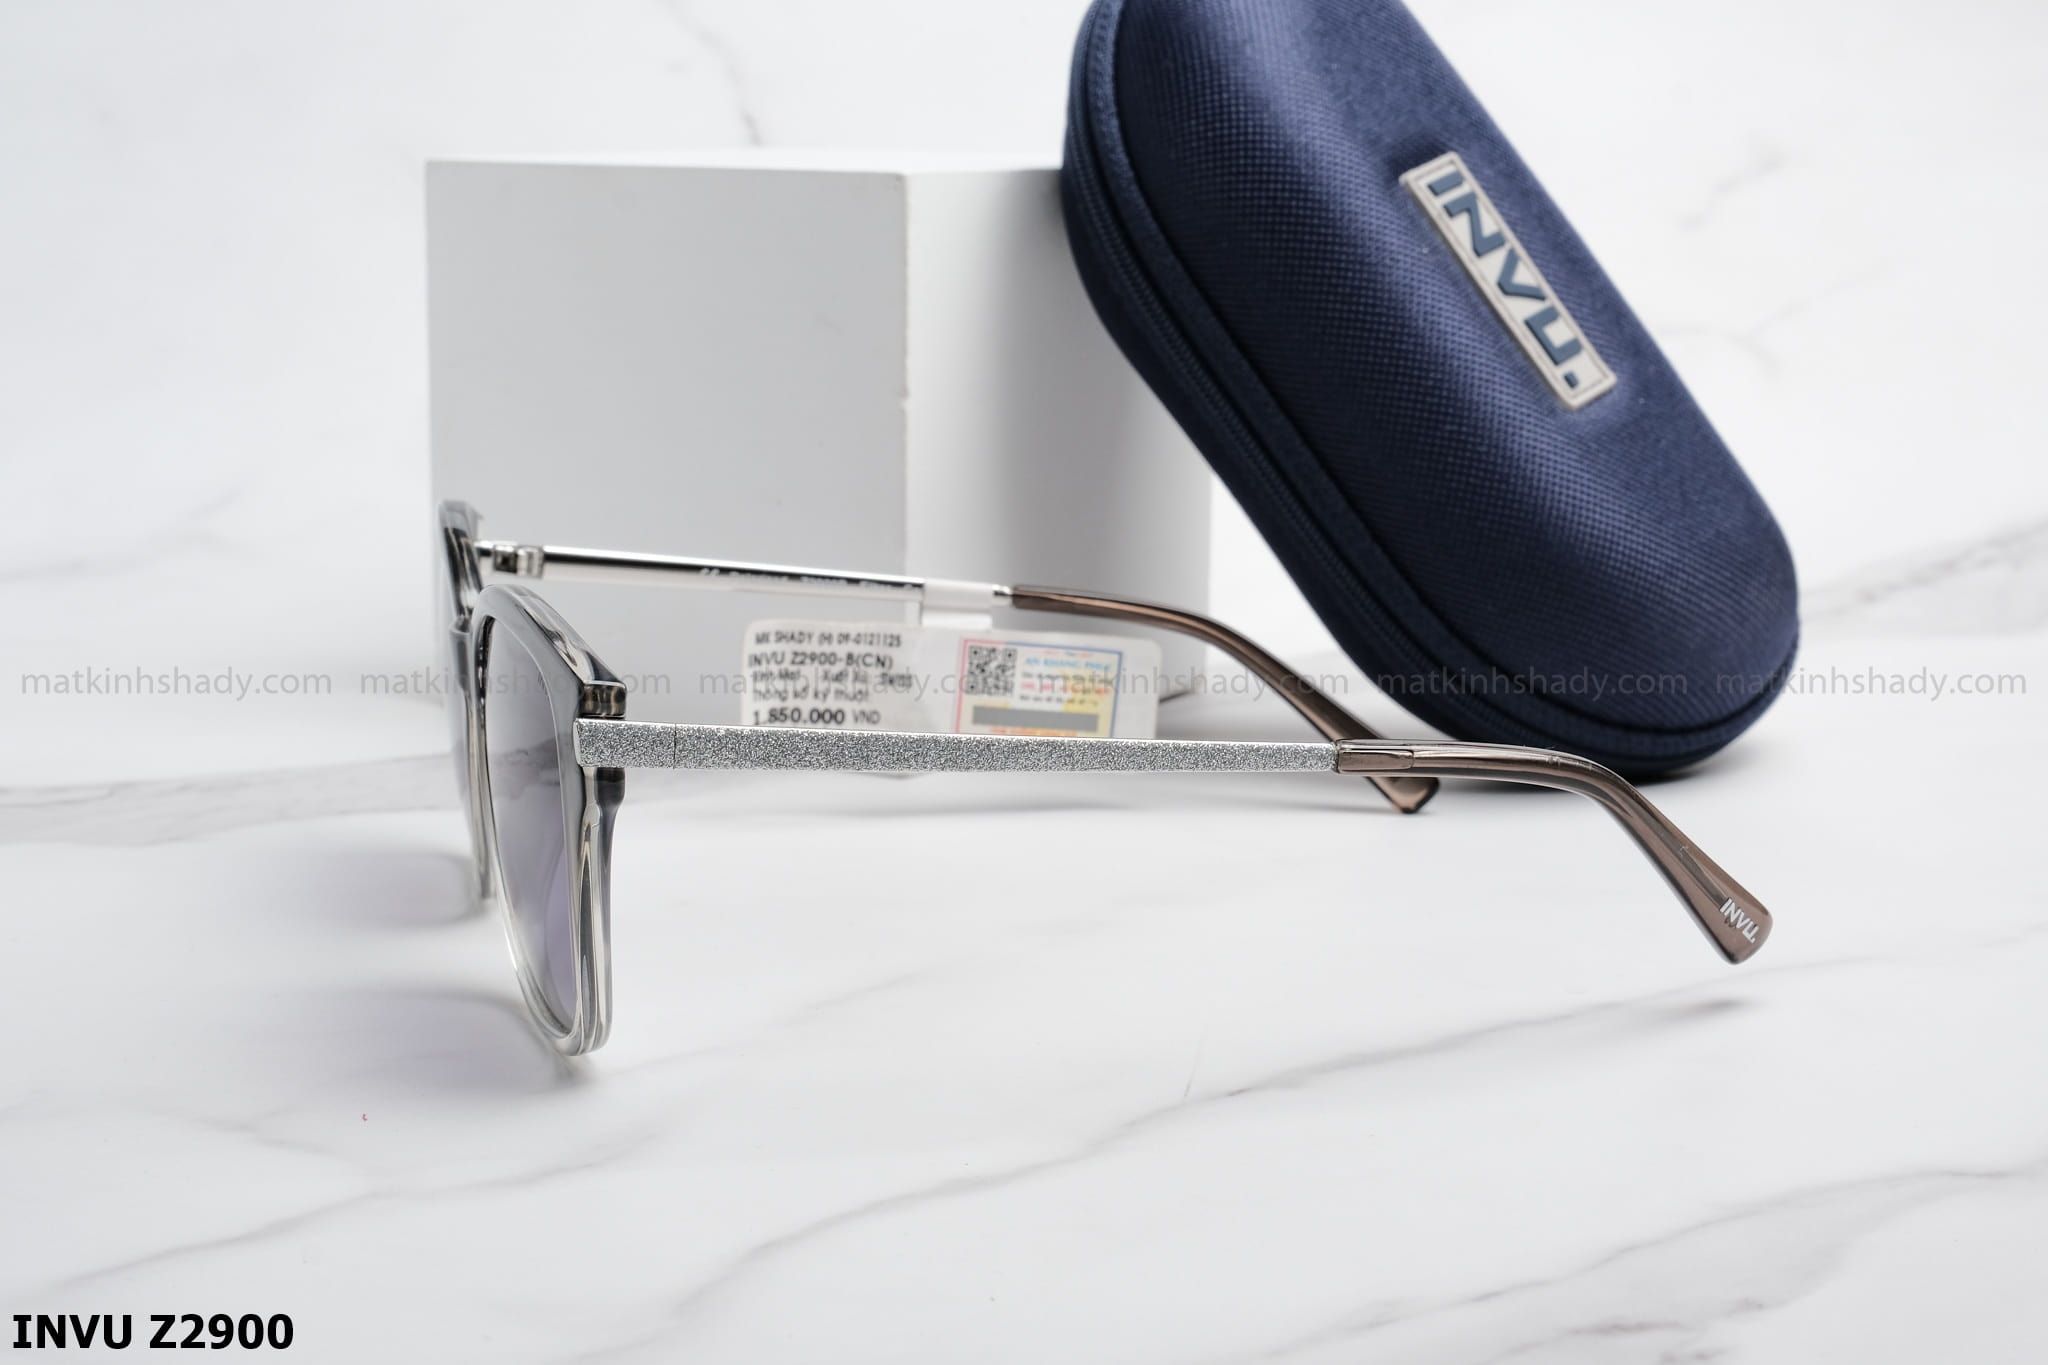  Invu Eyewear - Sunglasses - Z2900 